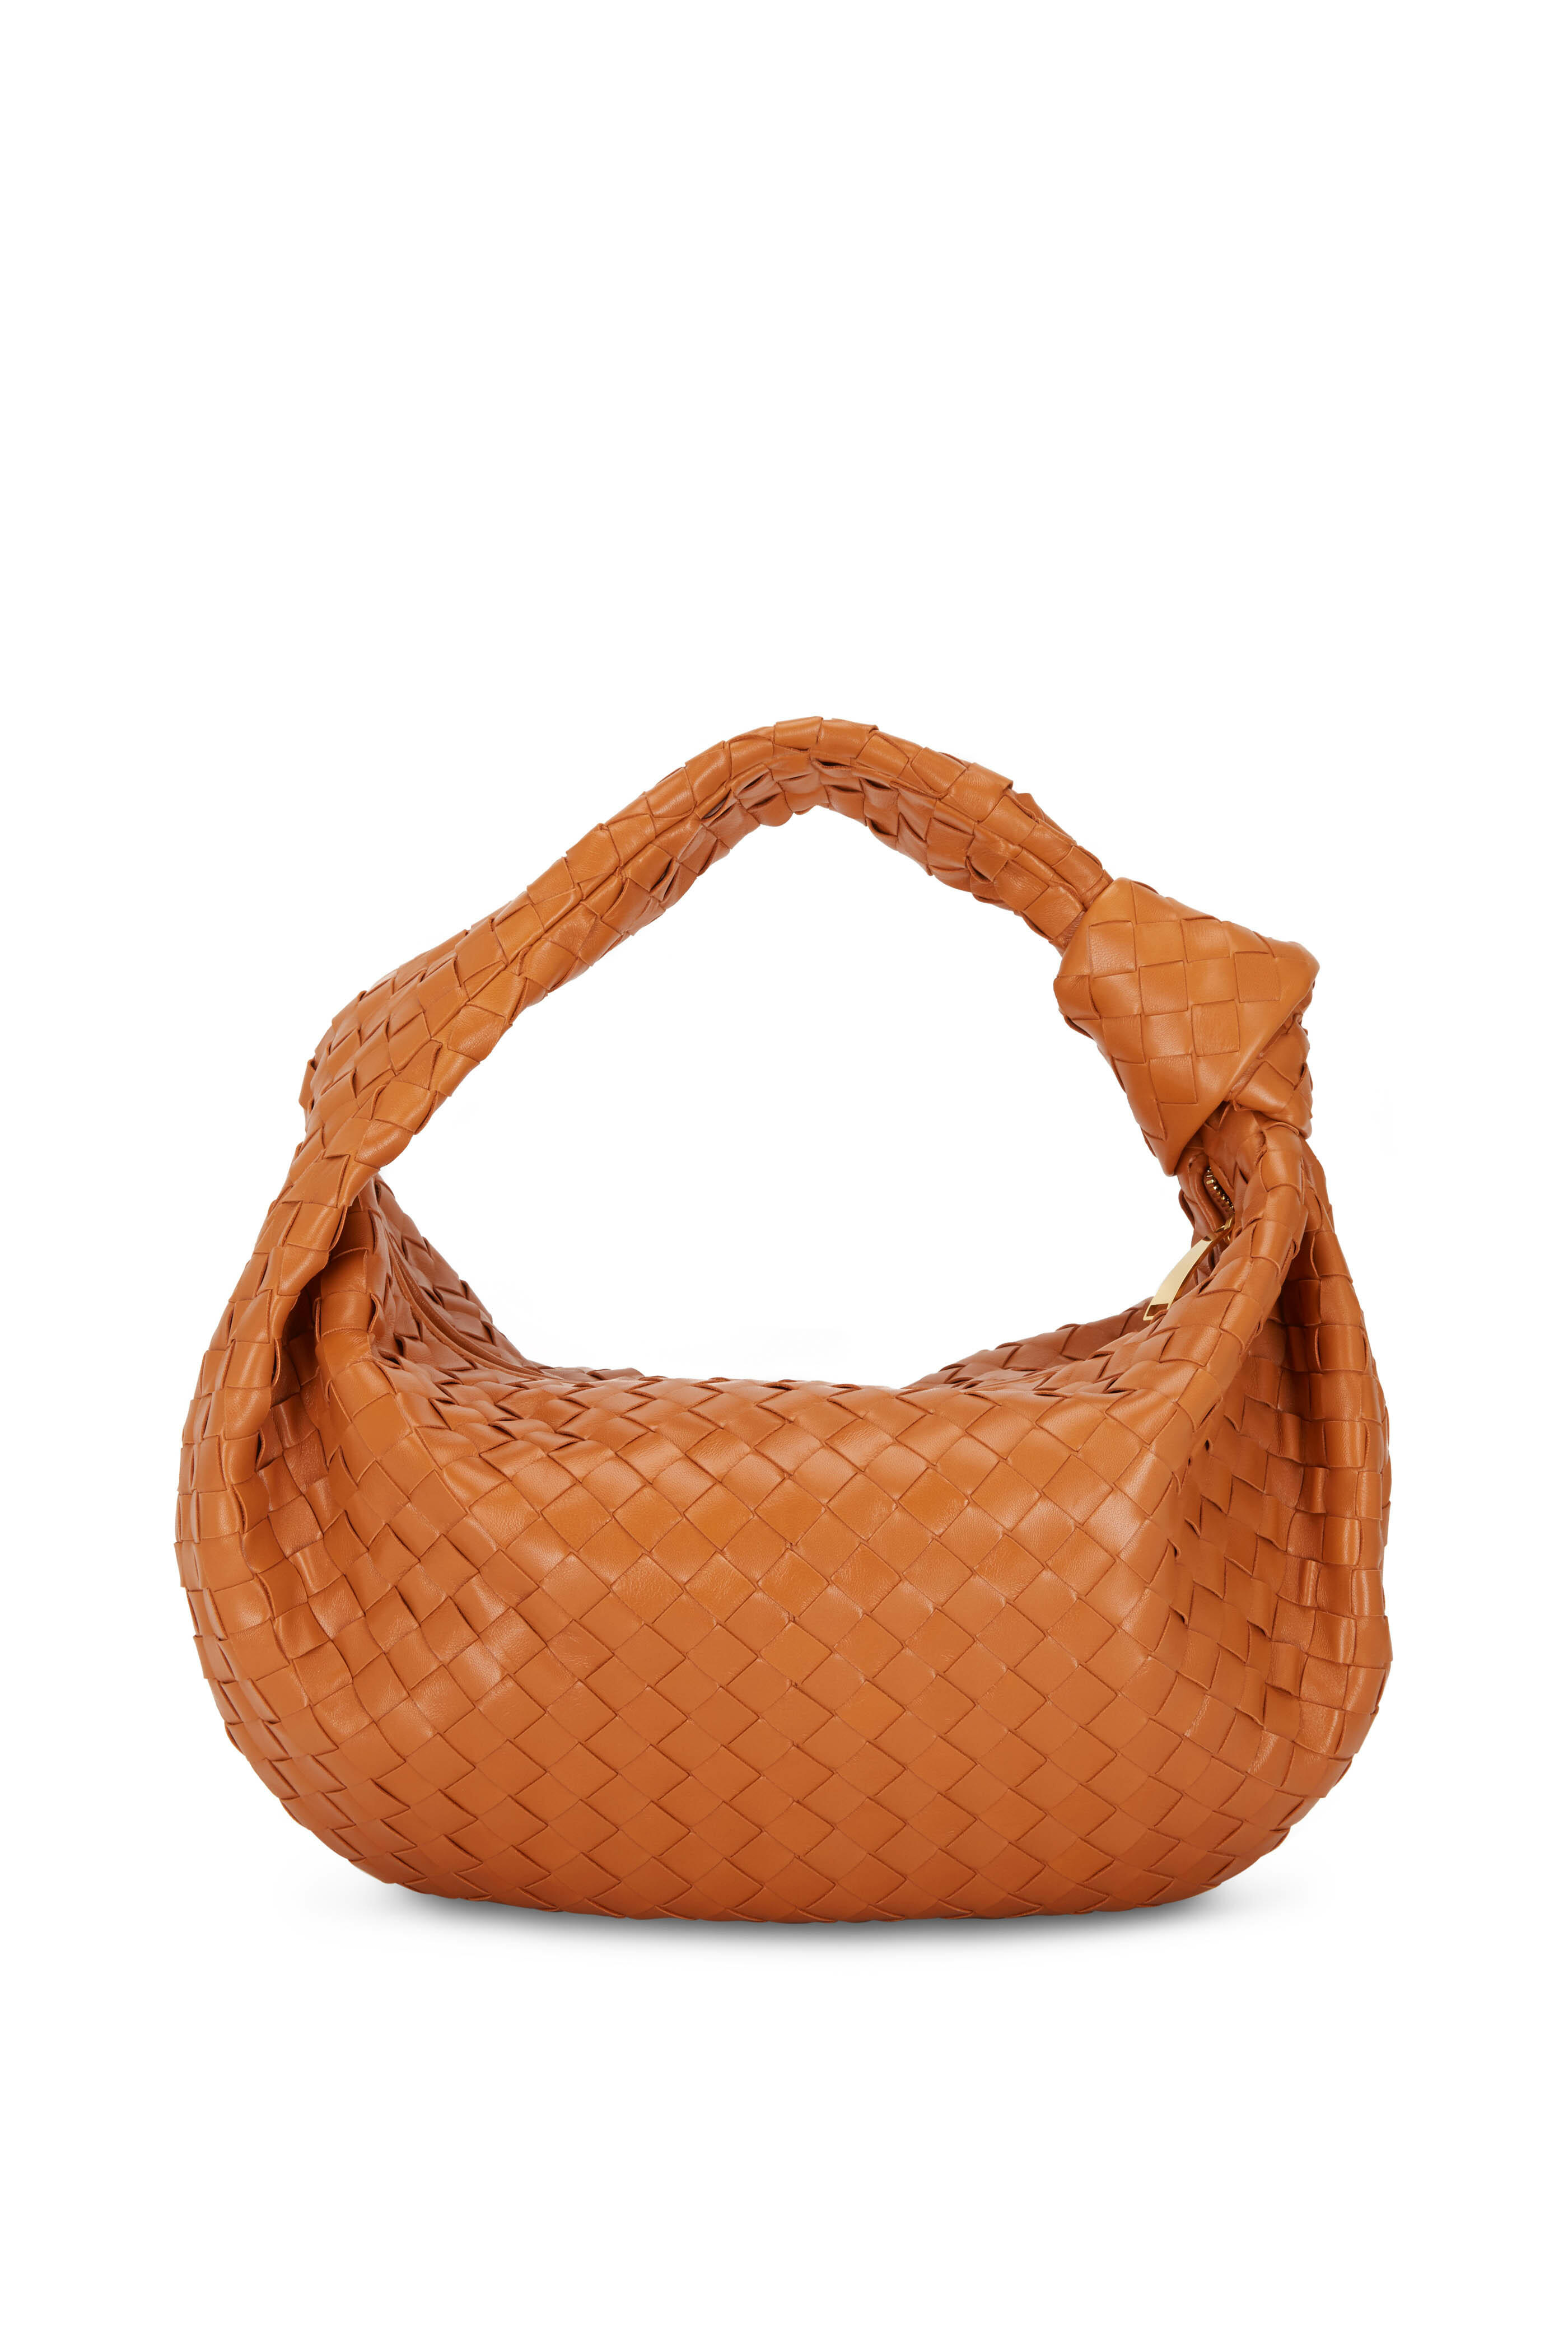 Bottega Veneta The Medium Jodie Leather Bag in Brown